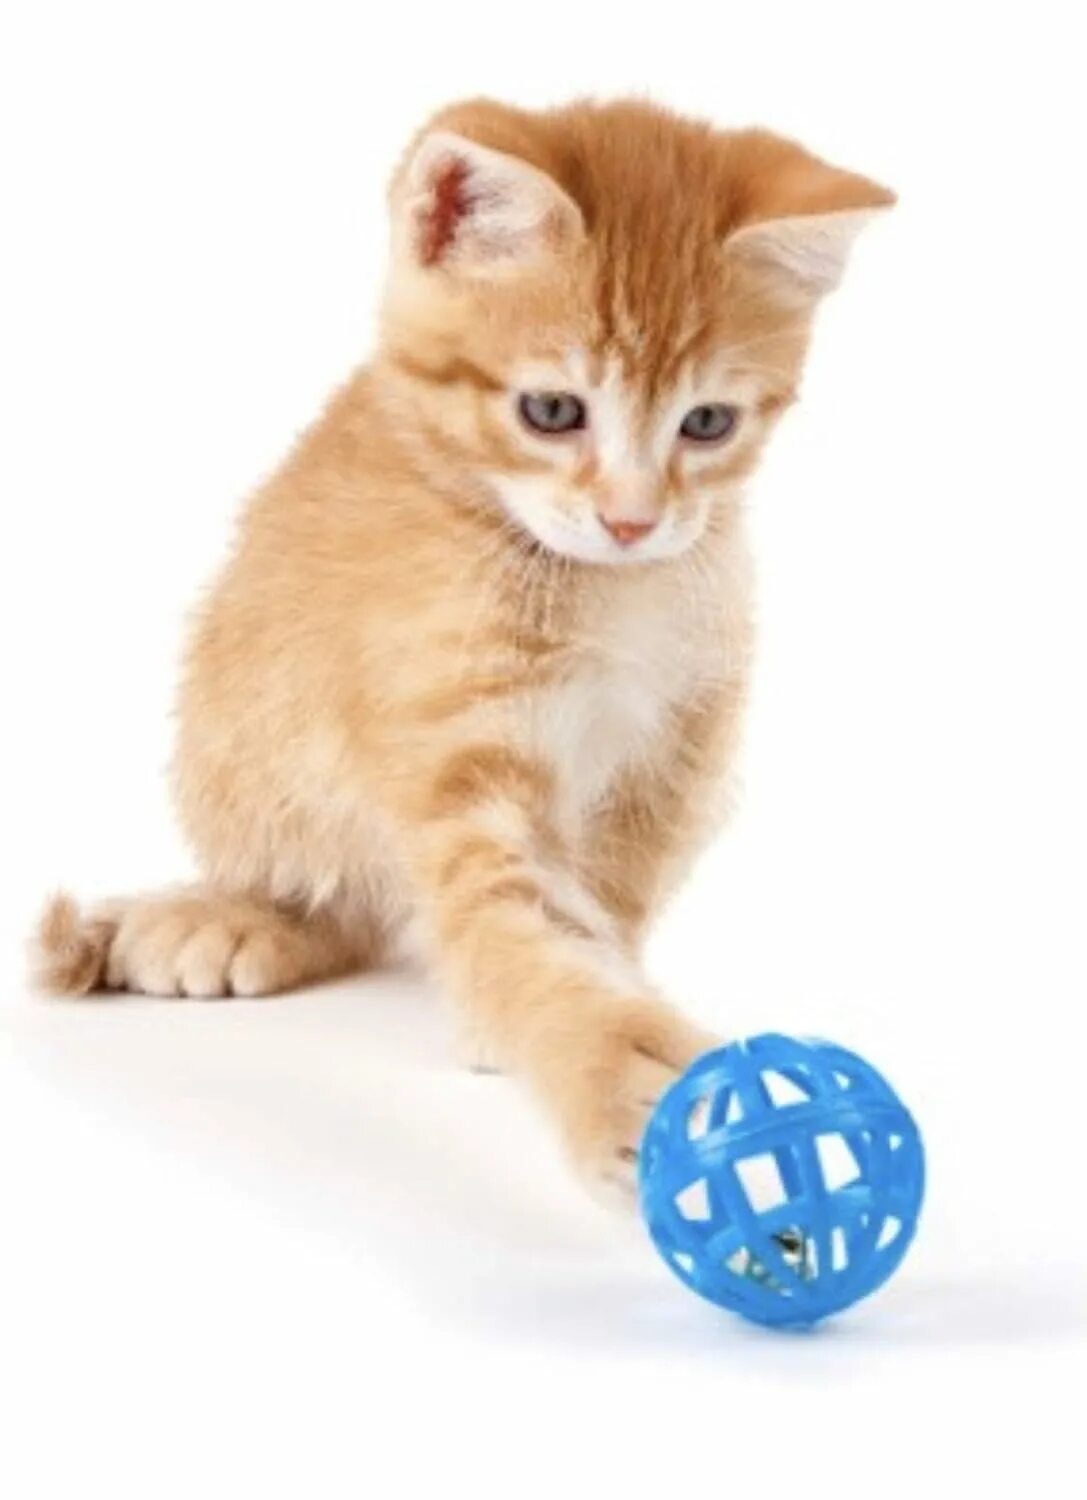 I play with cat. Котята играются. Играющие кошки. Котенок с мячиком. Кошка играет.